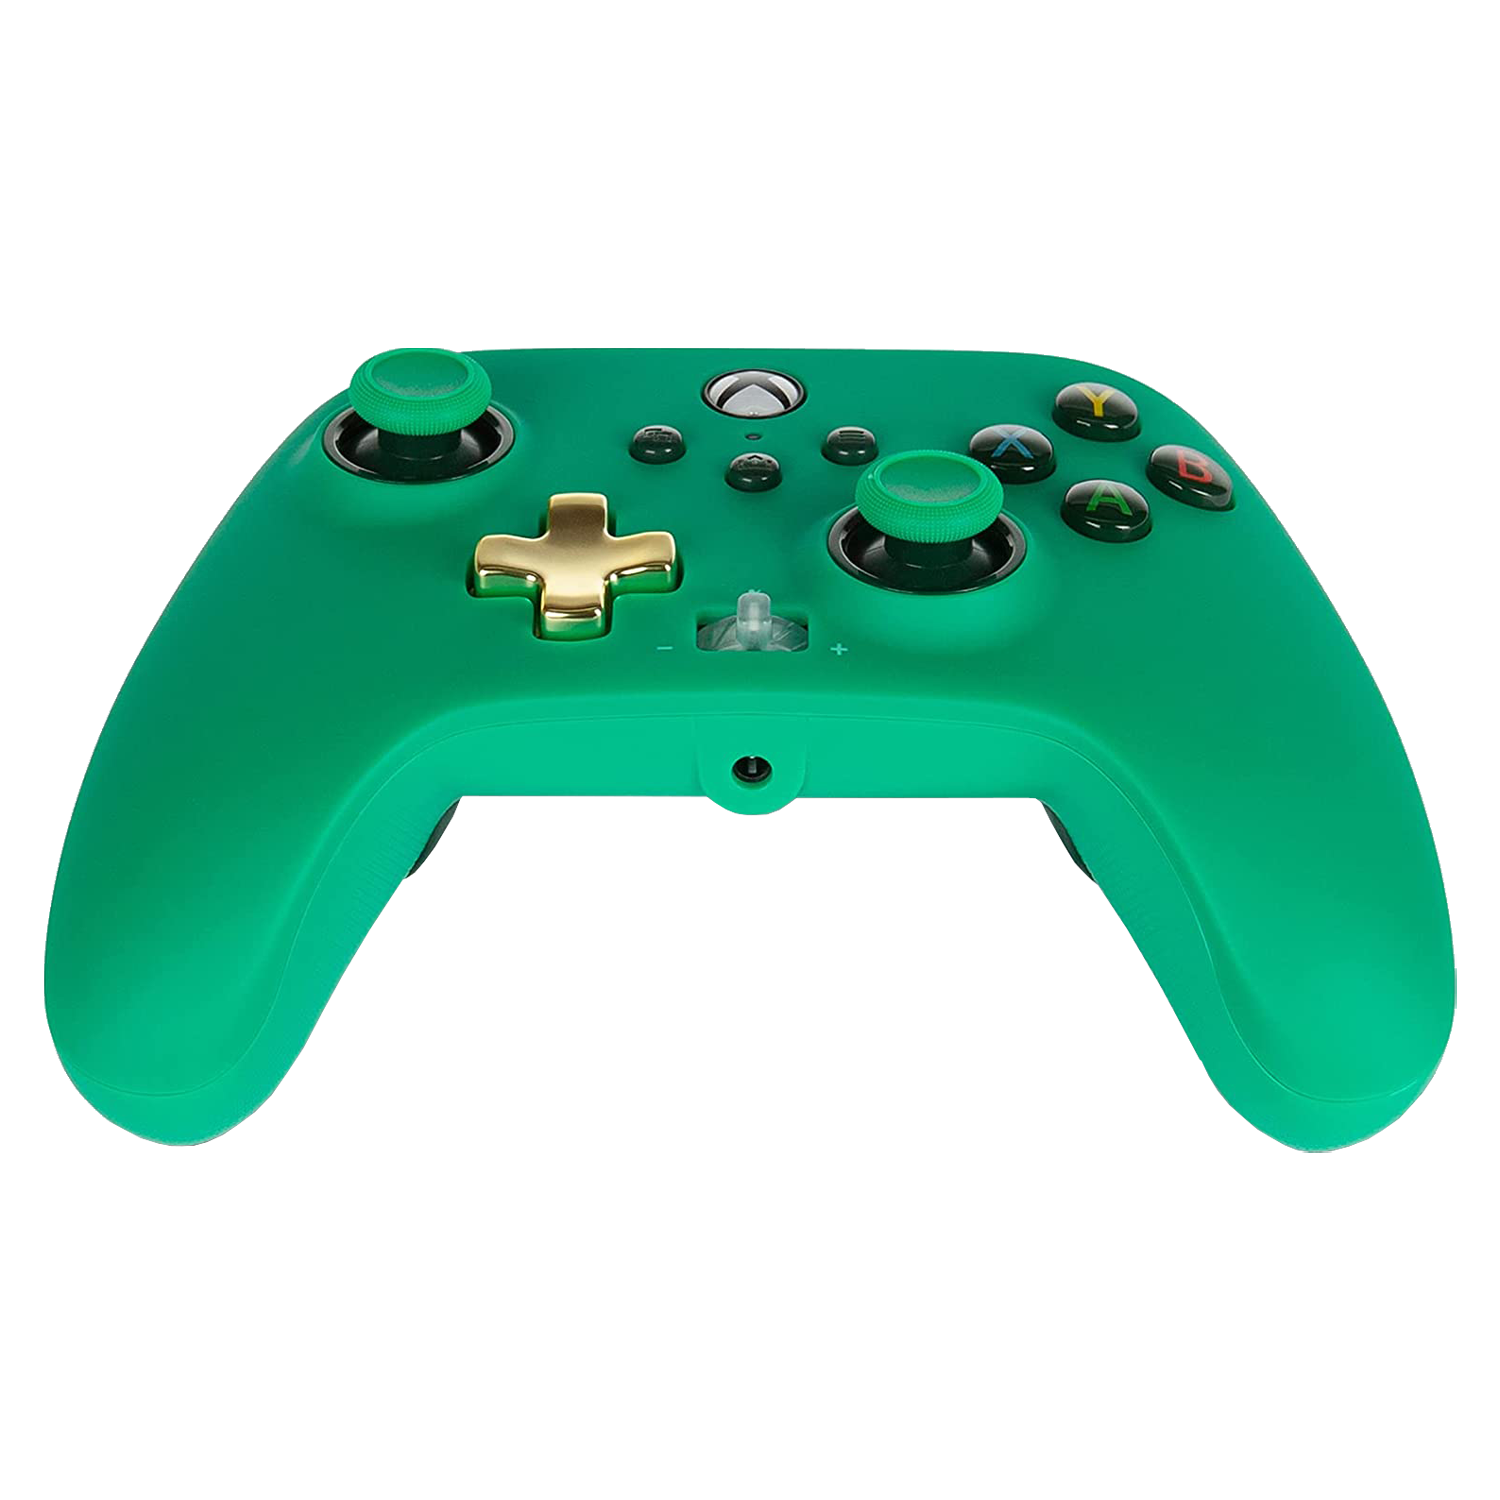 Controle PowerA Enhanced Wired para Xbox One - Verde Inline (PWA-A-02487)
